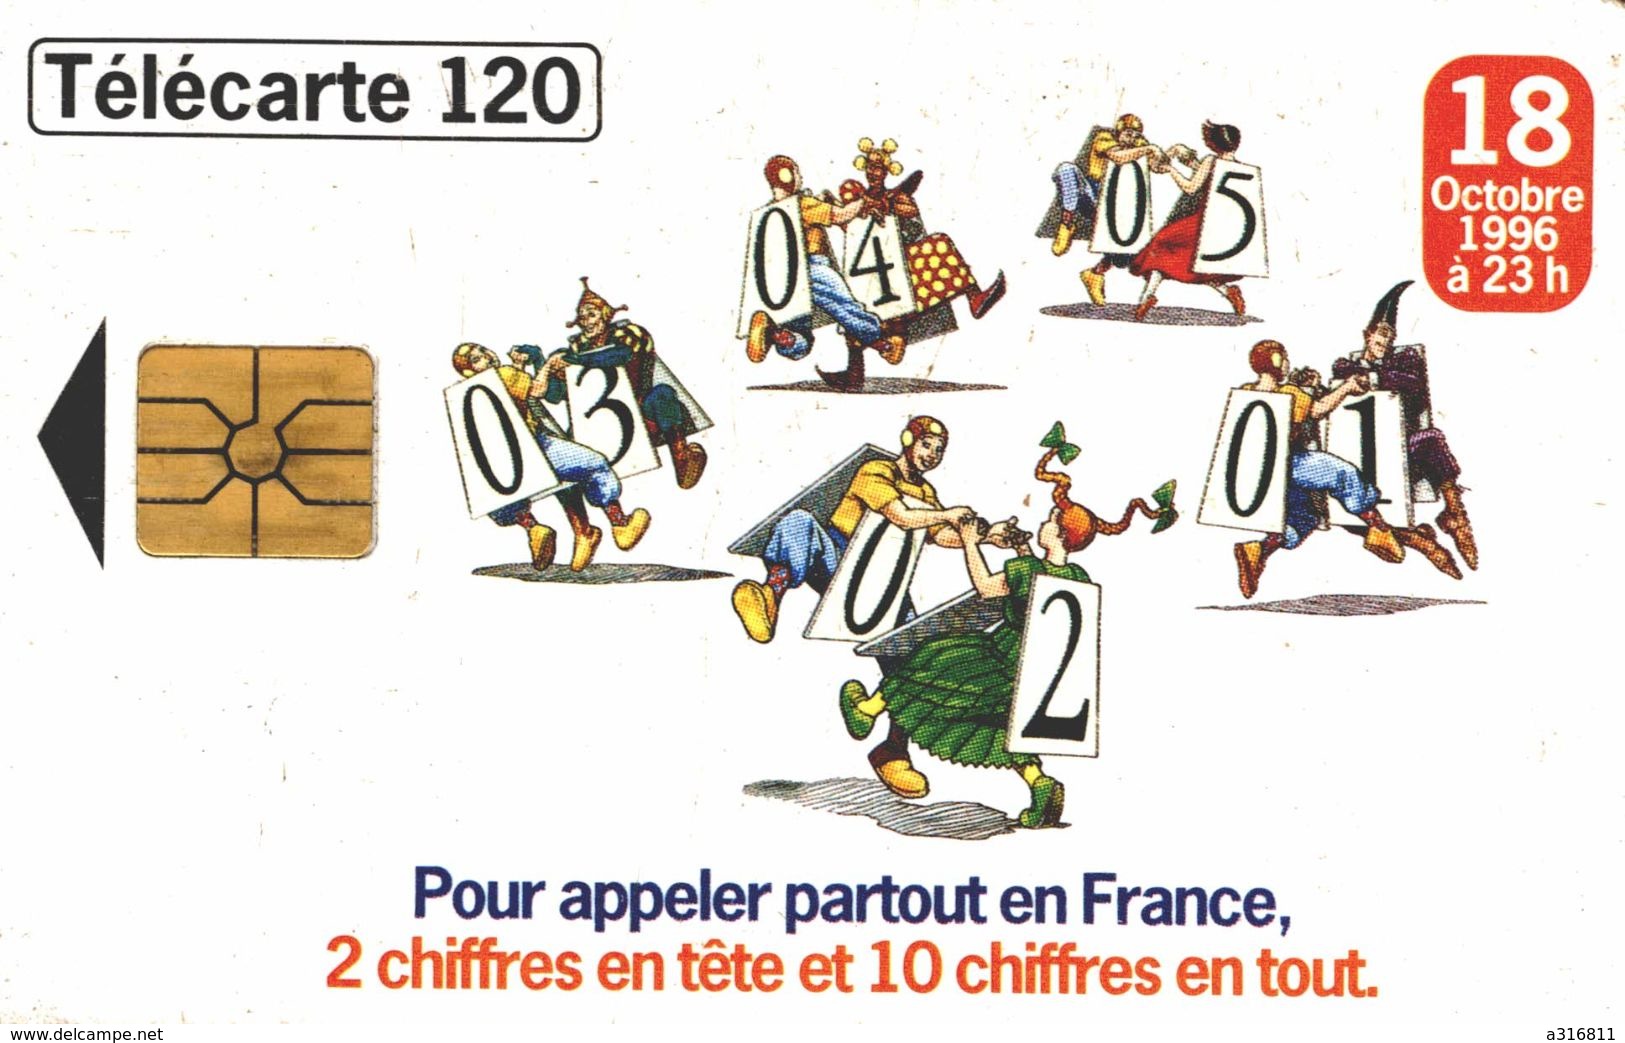 FRANCE TELECOM - 120 Eenheden